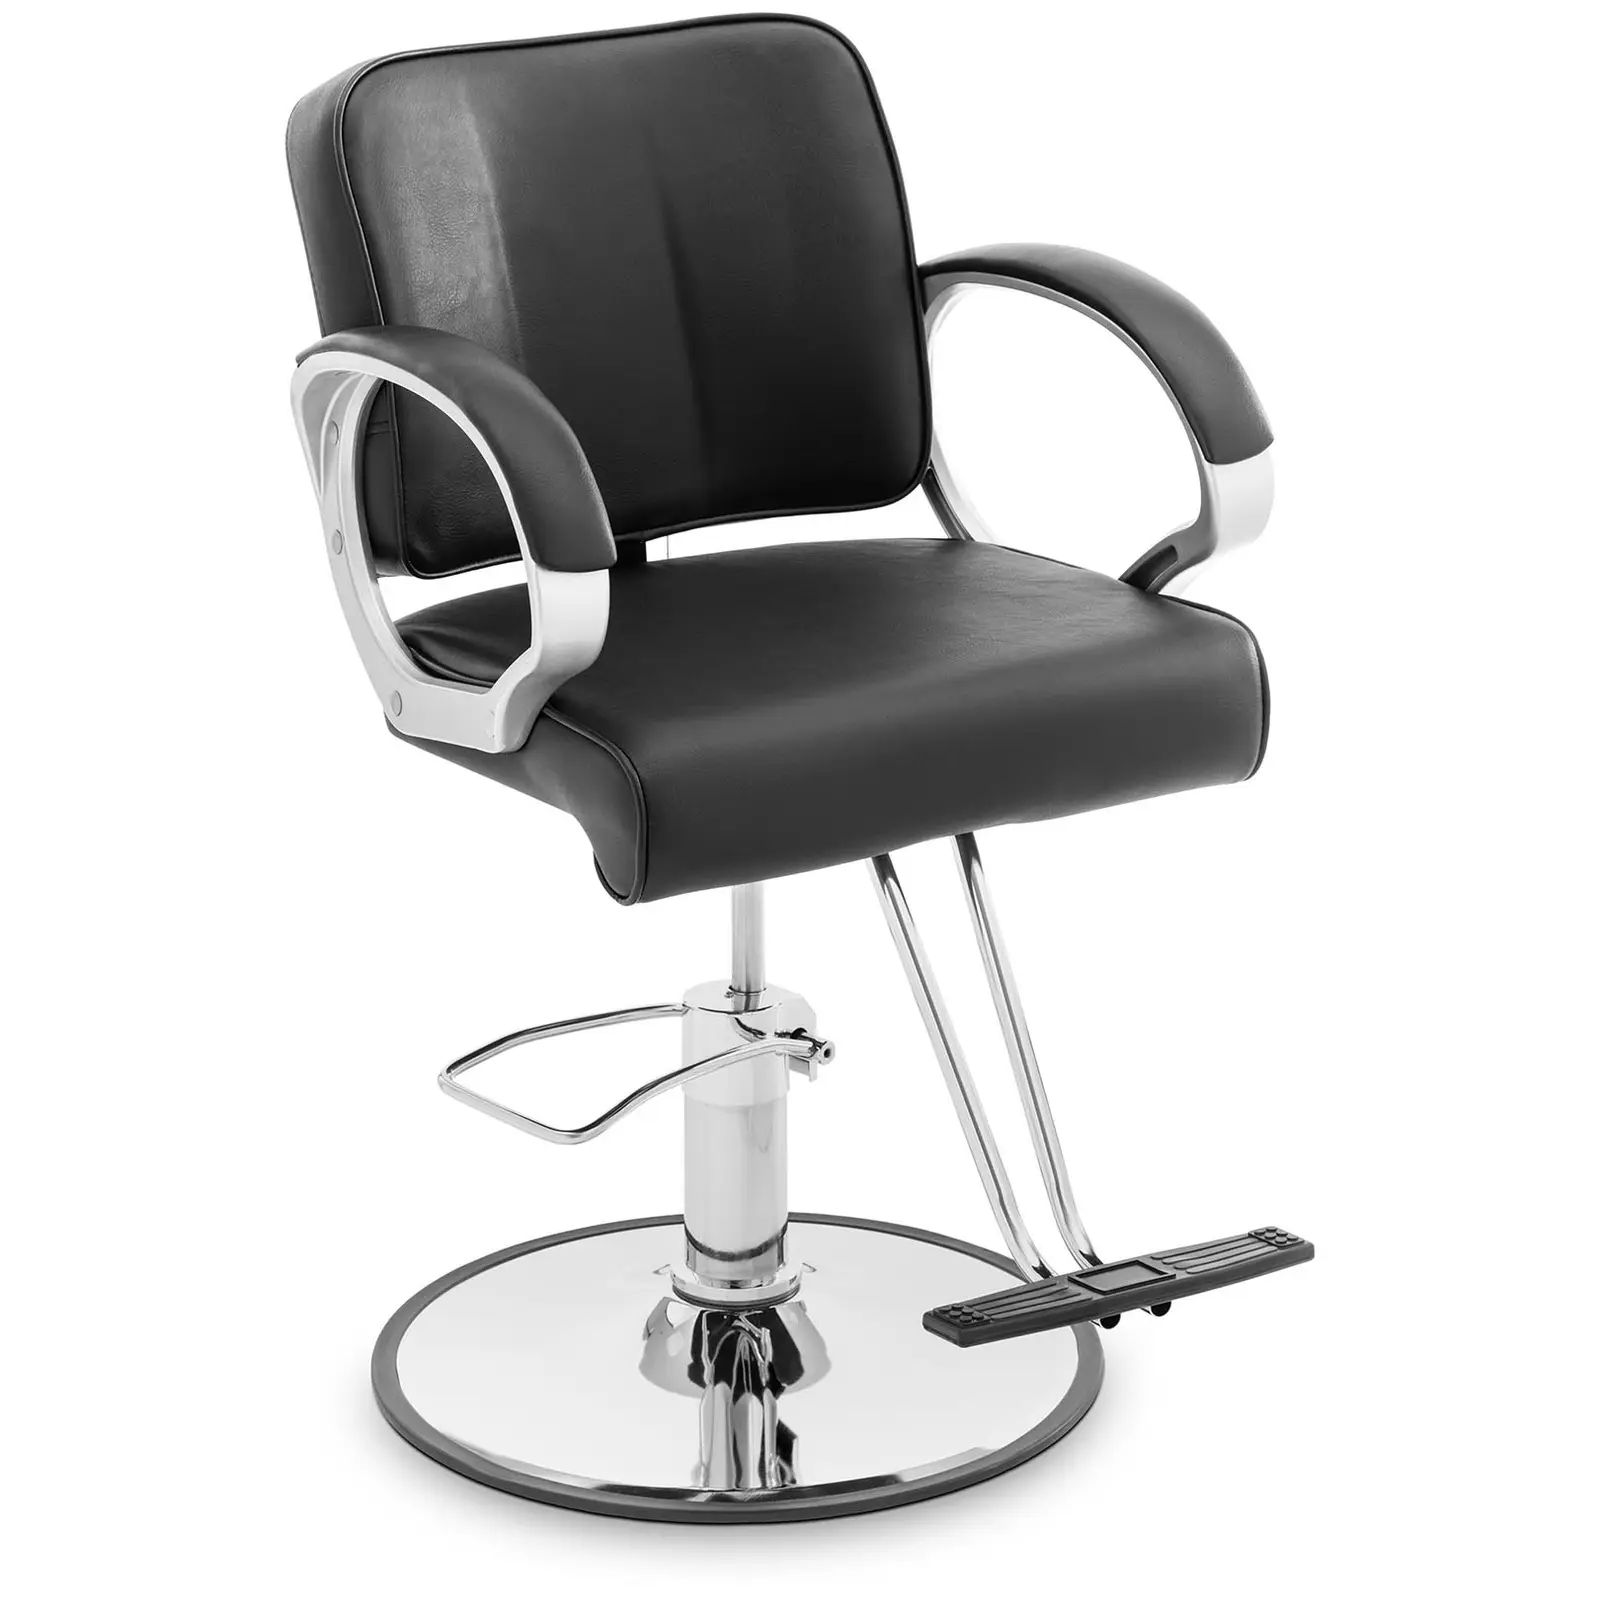 Salon chair - T-footrest - {{min_sitting_height}} - 60 cm - 180 kg - black